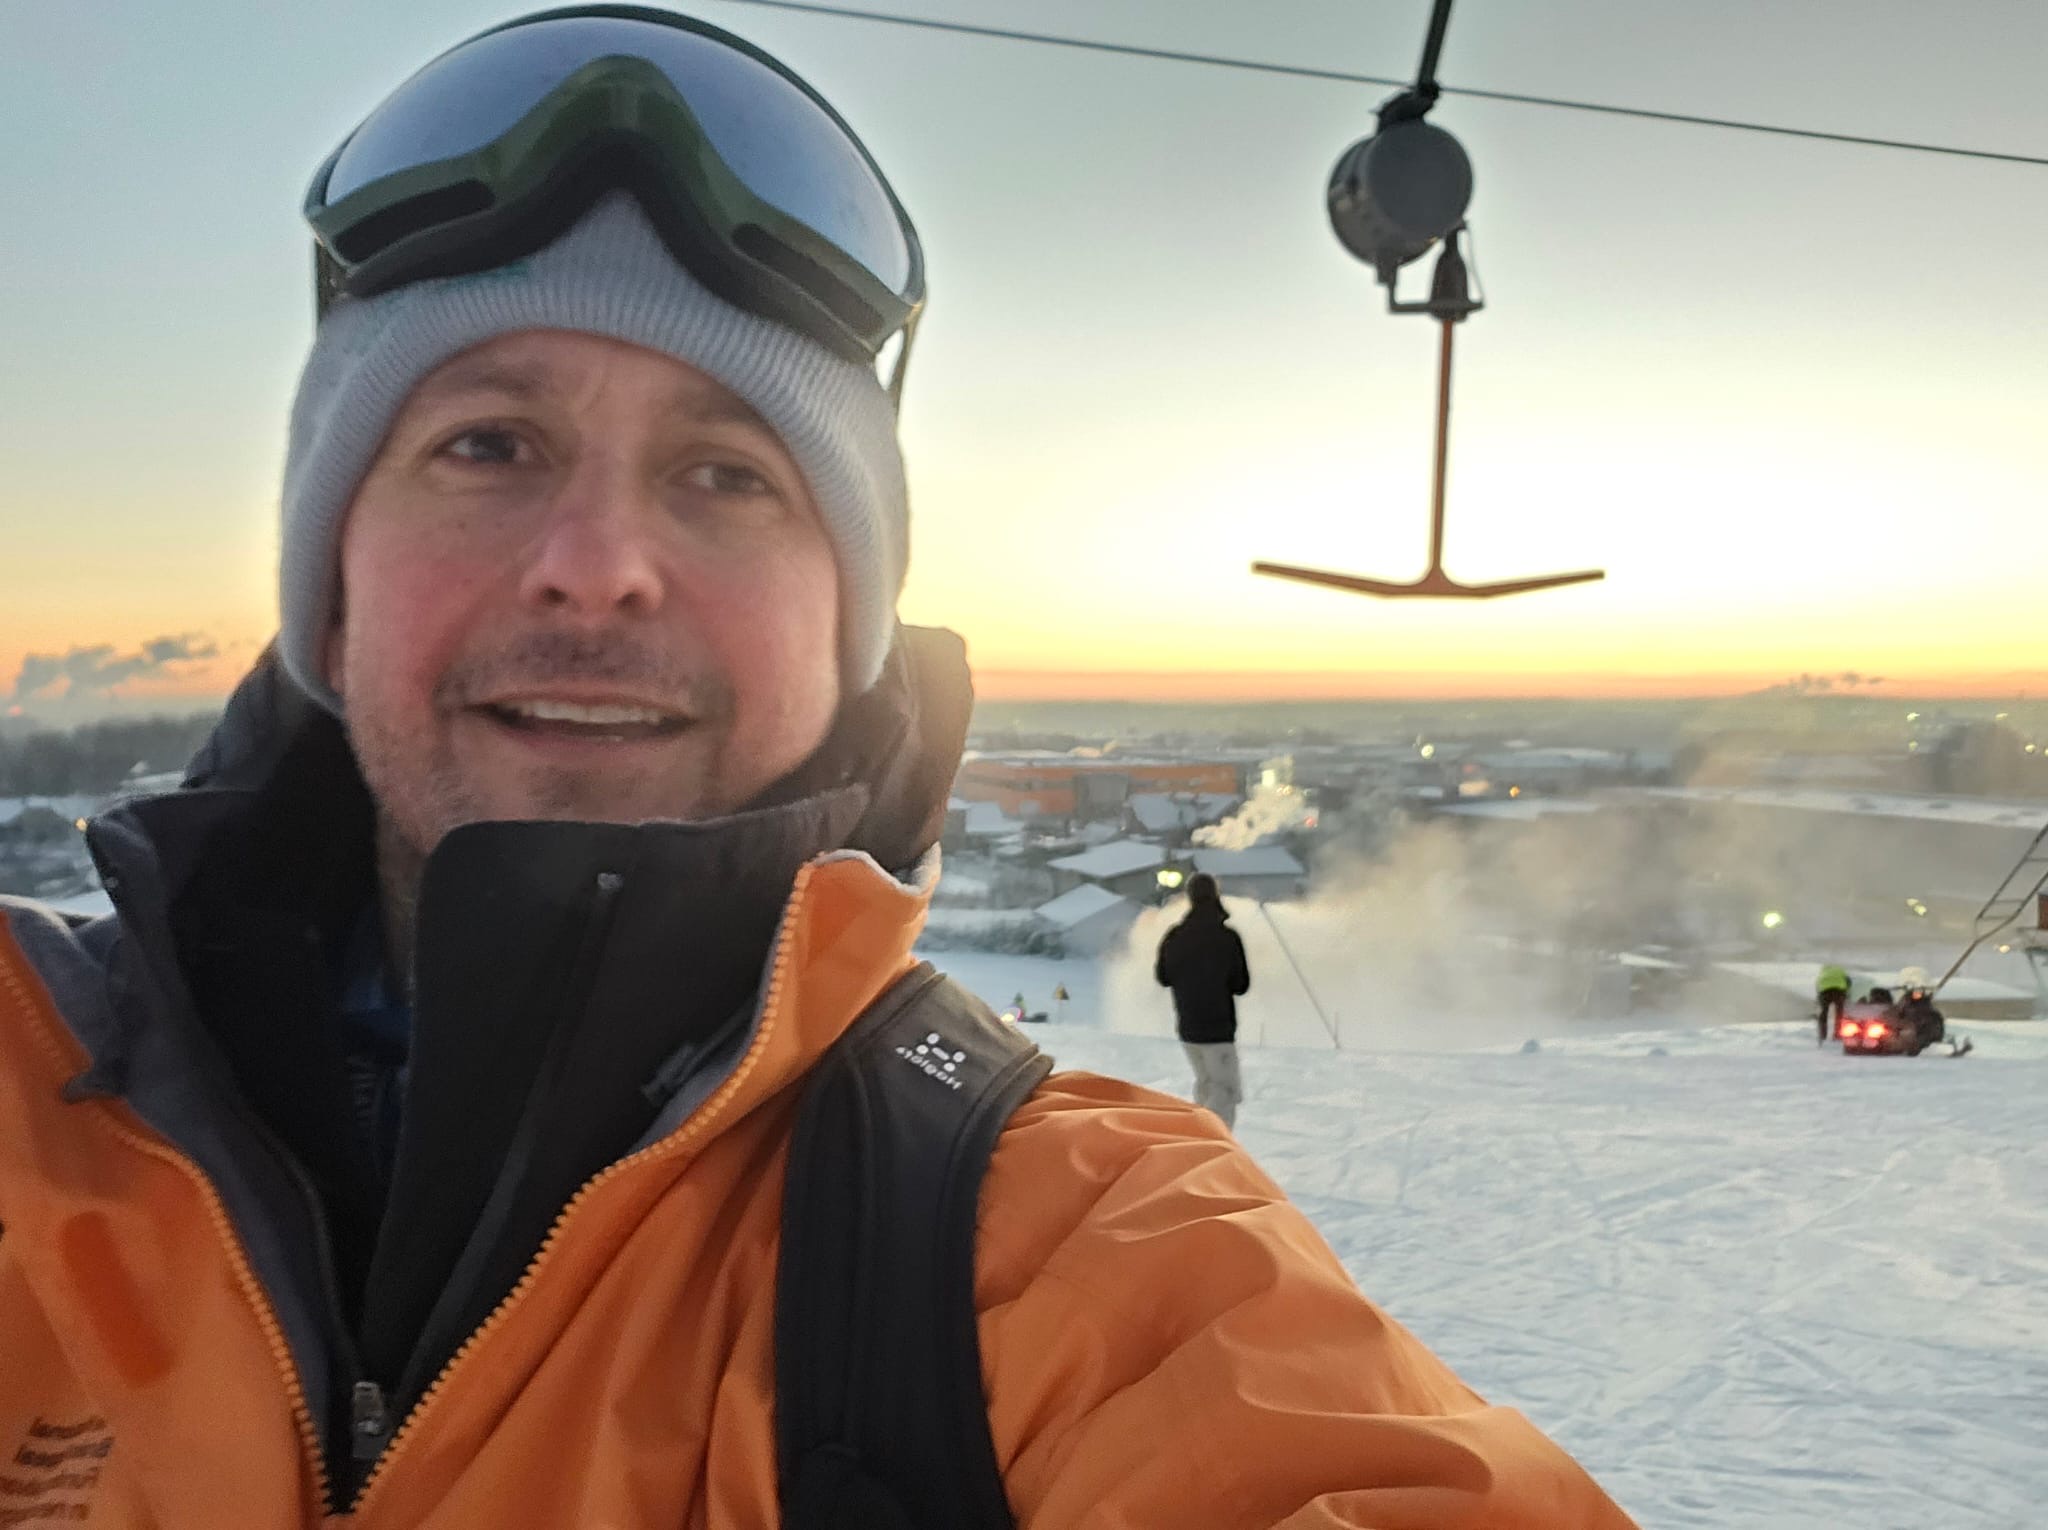 A selfie of James Dick on a ski slope